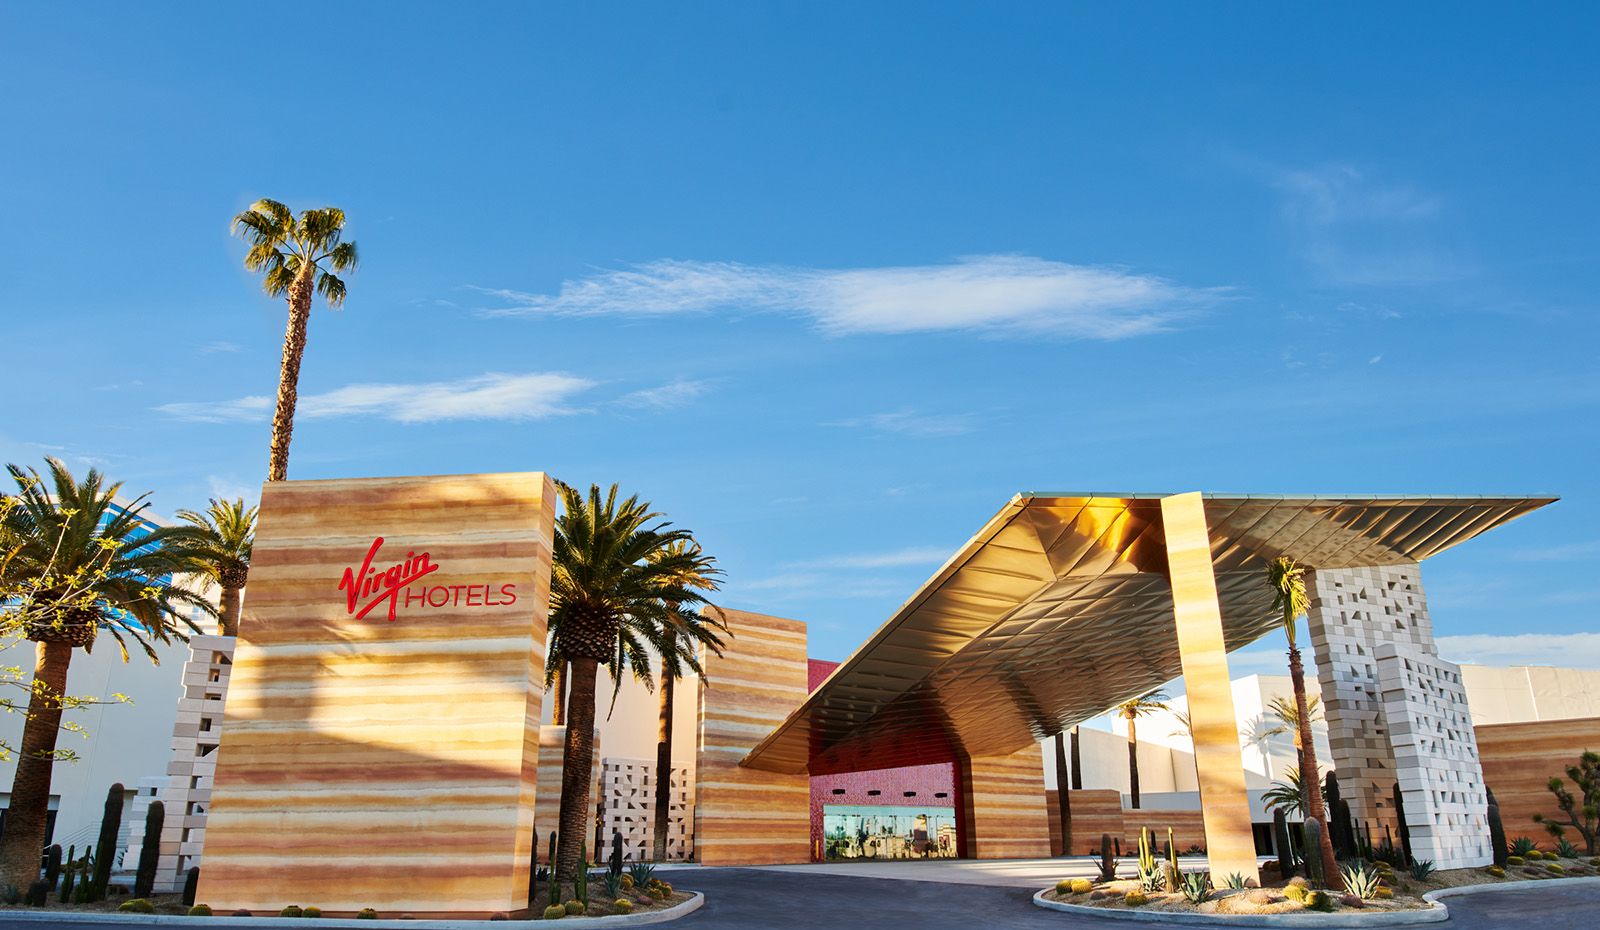 Las Vegas casinos, restaurants reopening soon